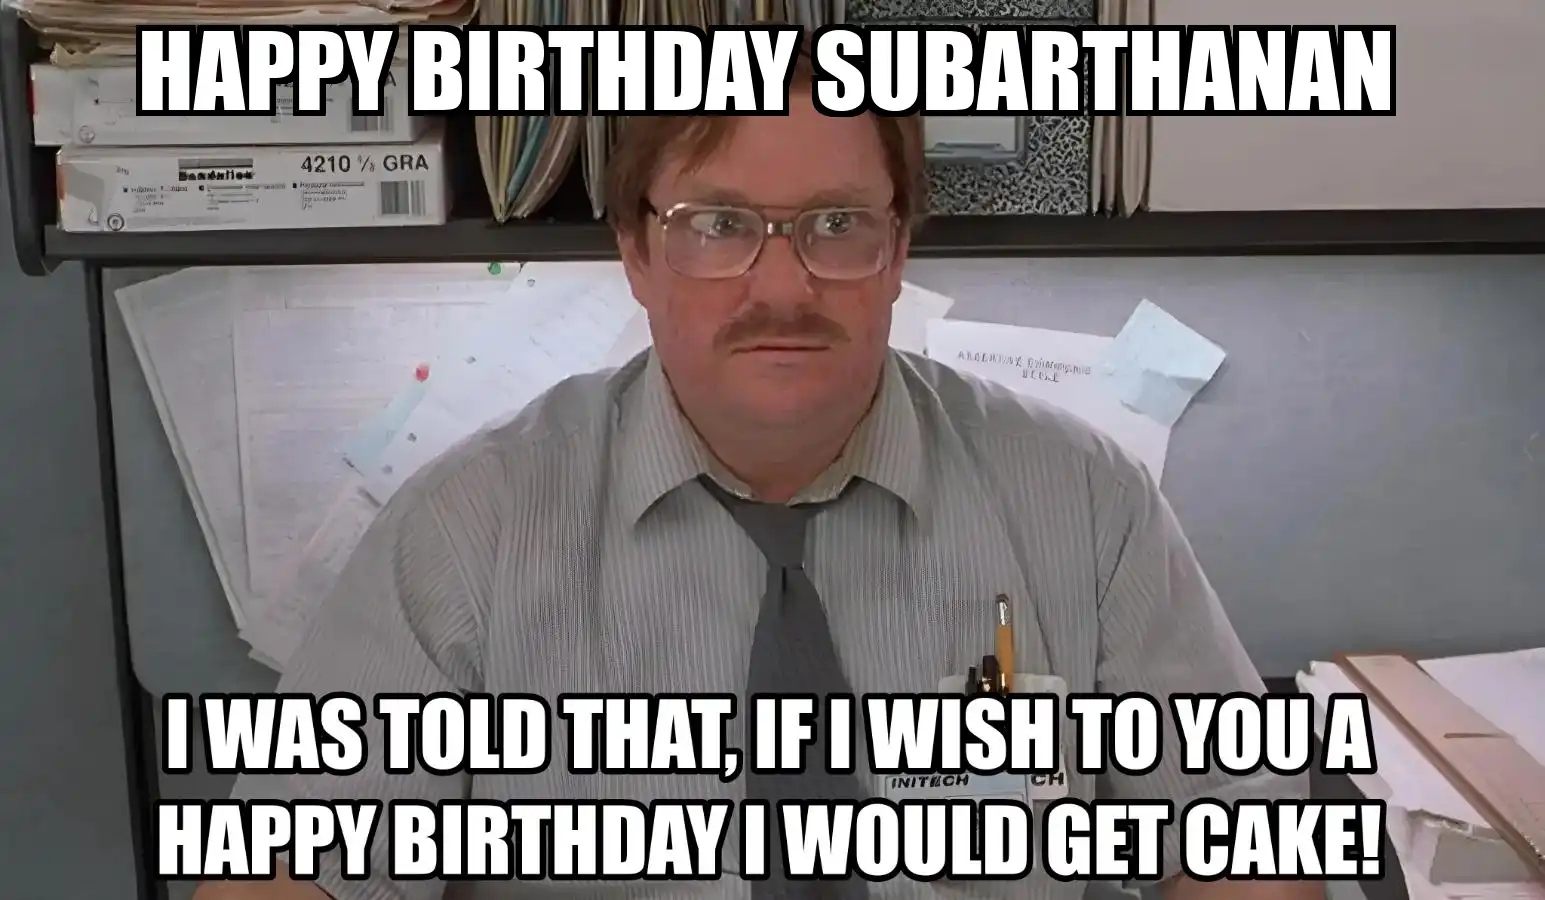 Happy Birthday Subarthanan I Would Get A Cake Meme